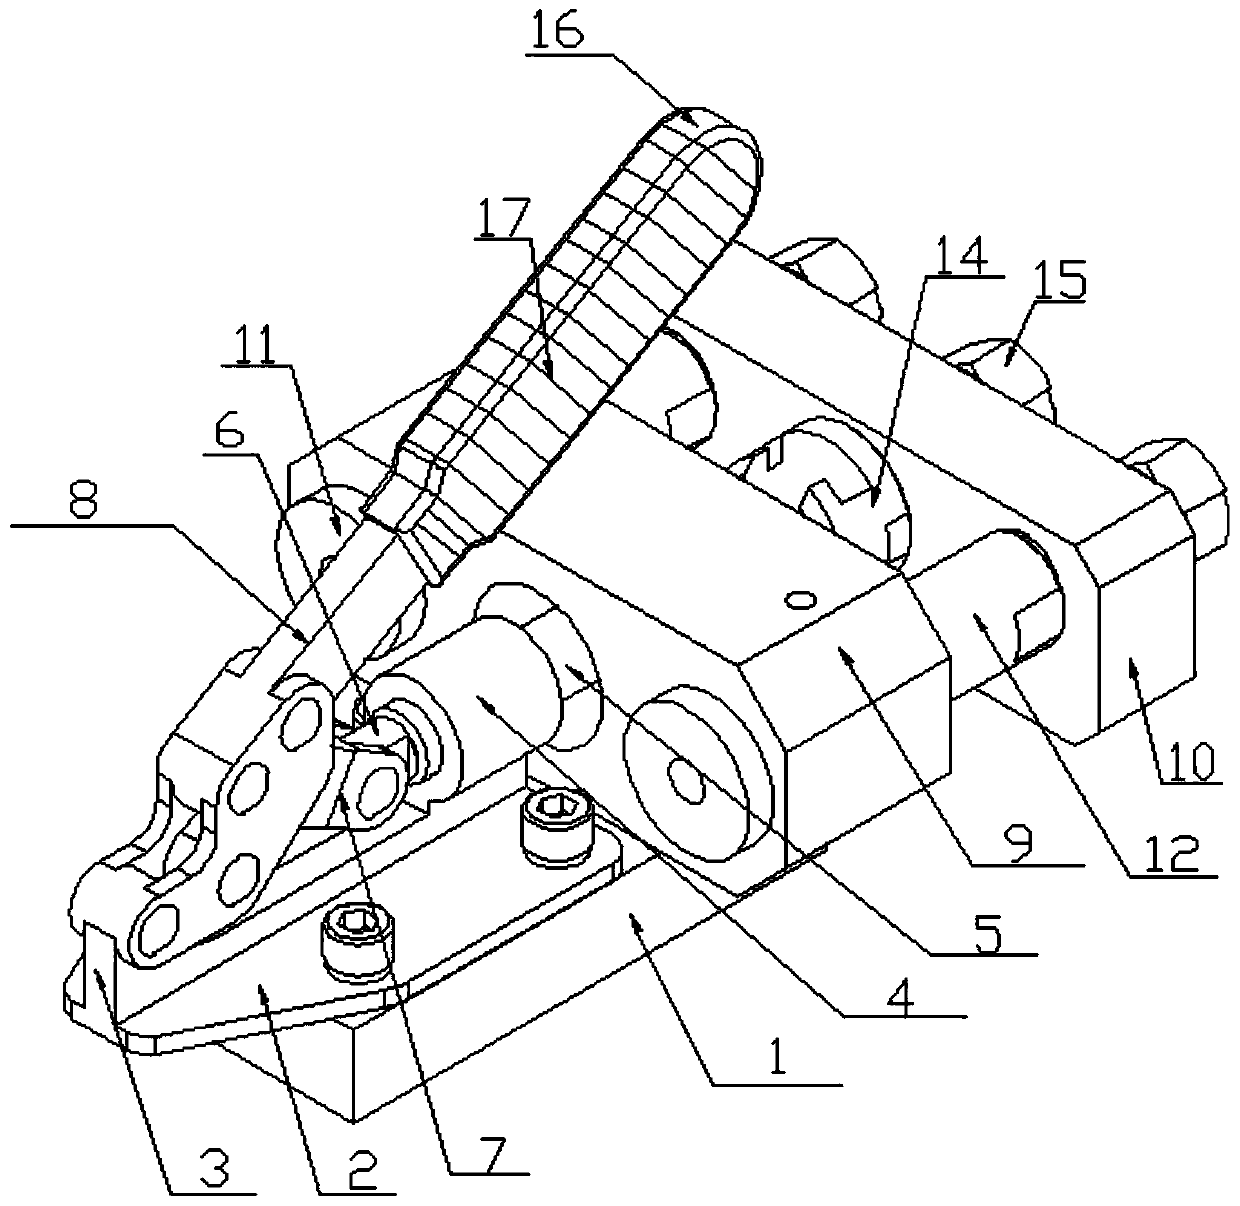 Double guide-bar telescoping mechanism for motor vehicle equipment